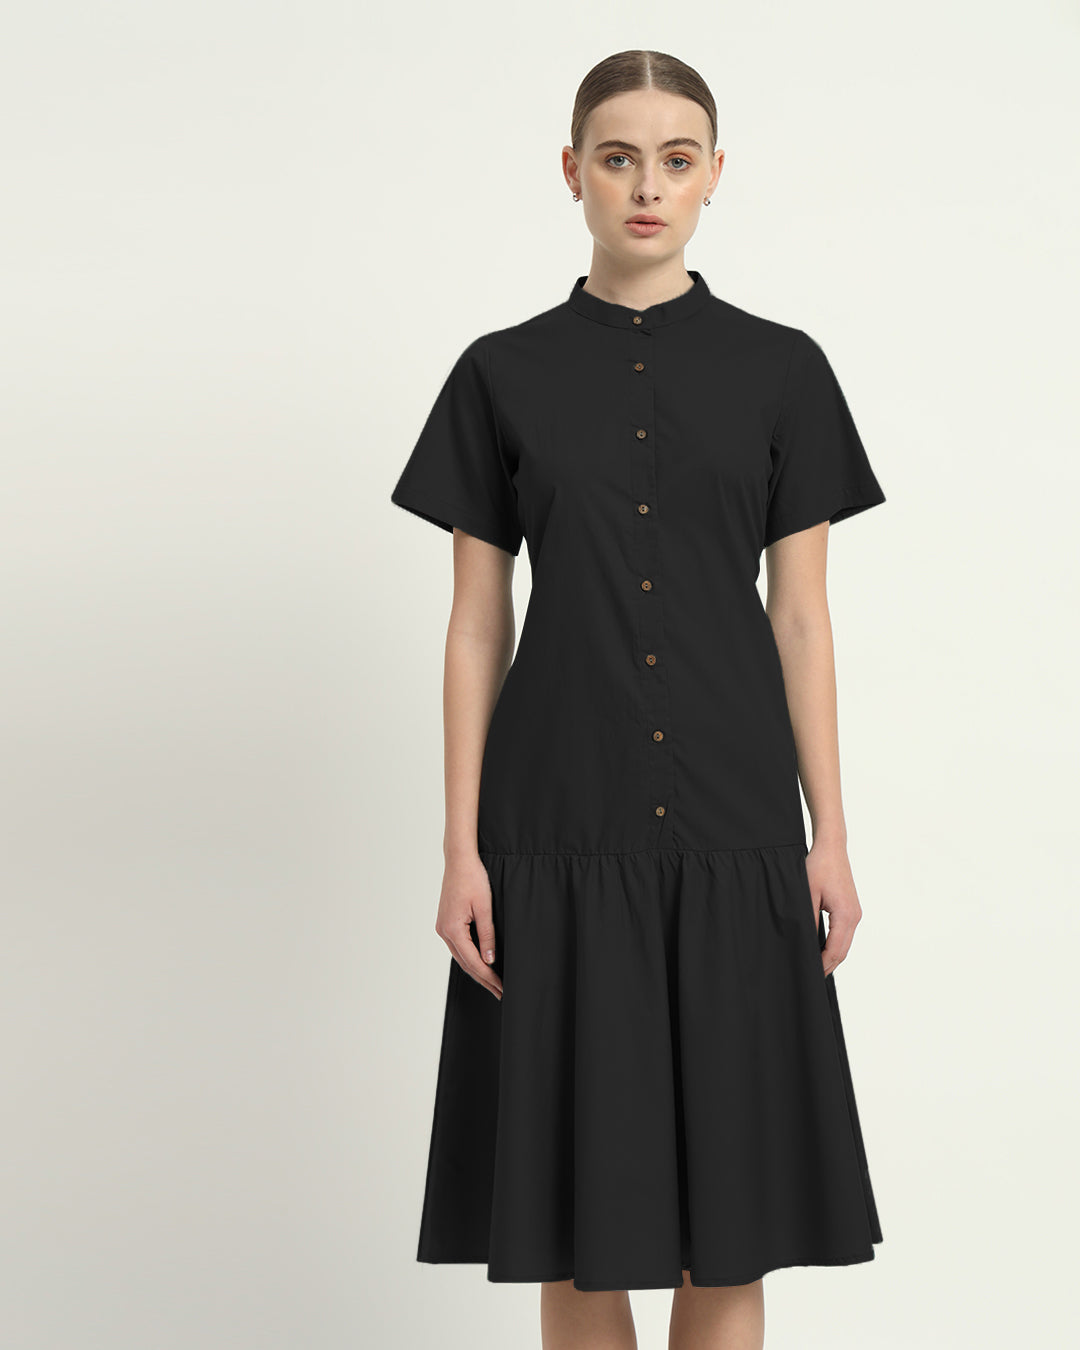 The Noir Melrose Cotton Dress